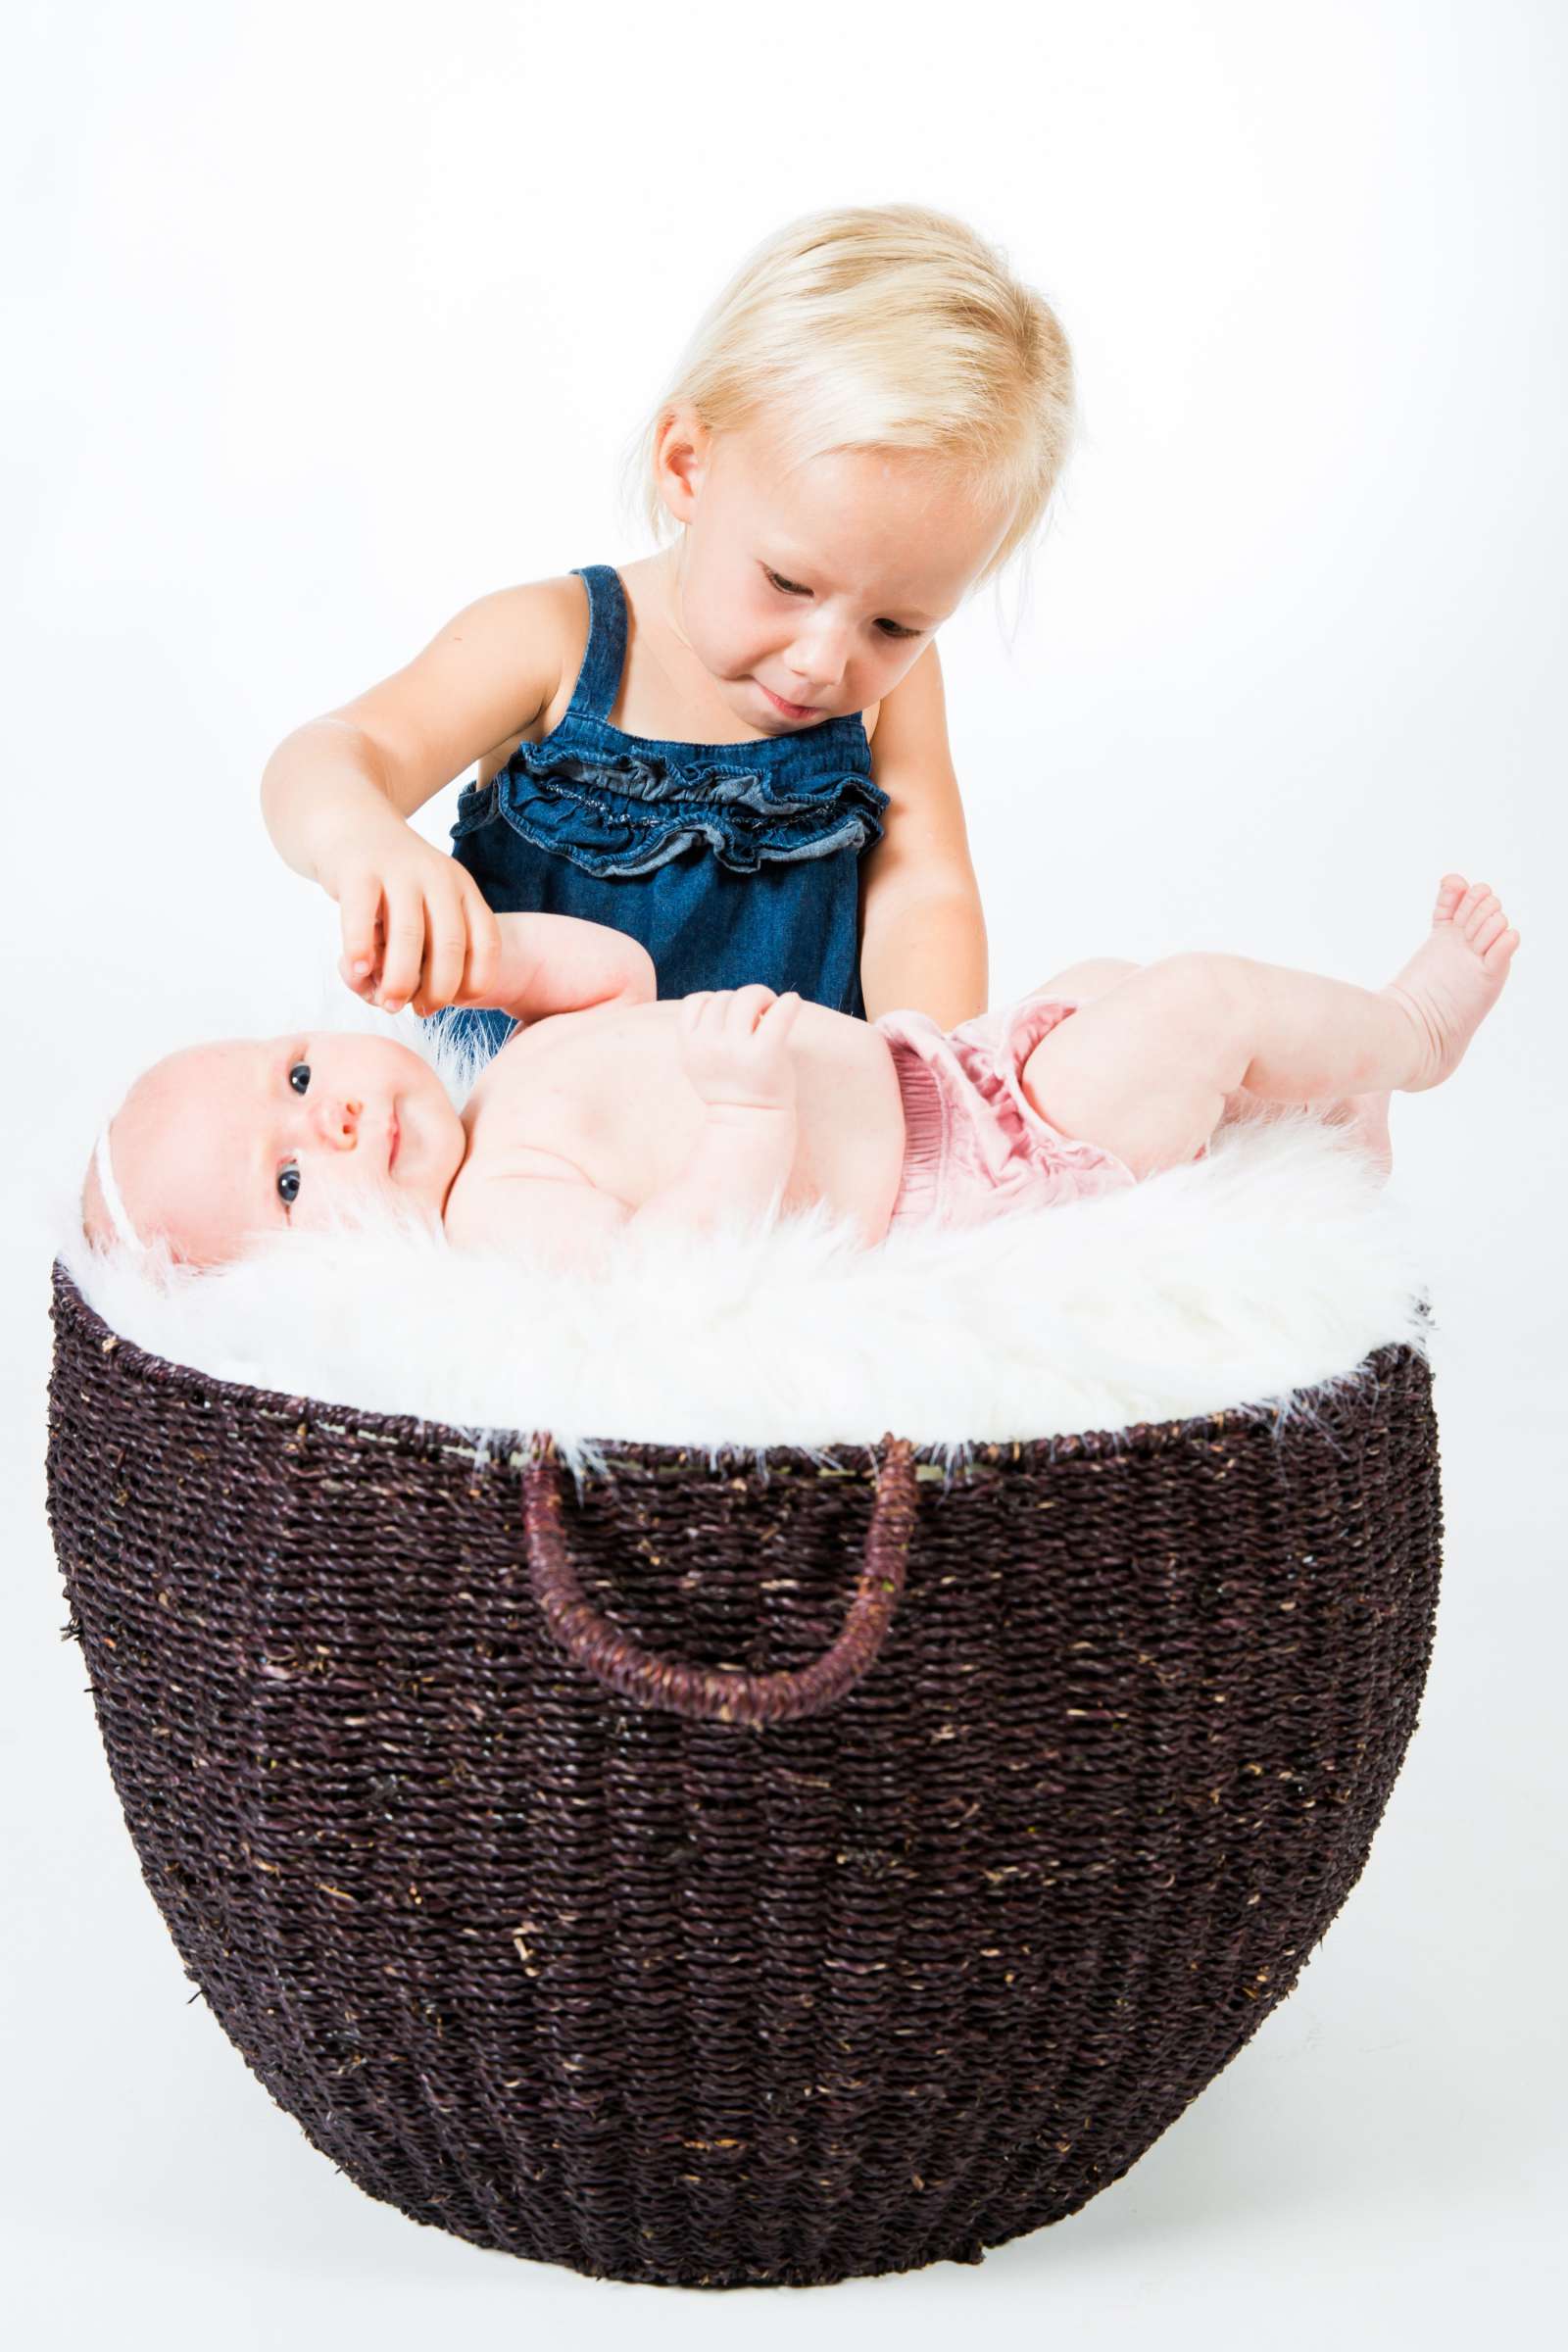 Newborn Photo Session, Jacqueline and Dallas Newborn Photo #10 by True Photography